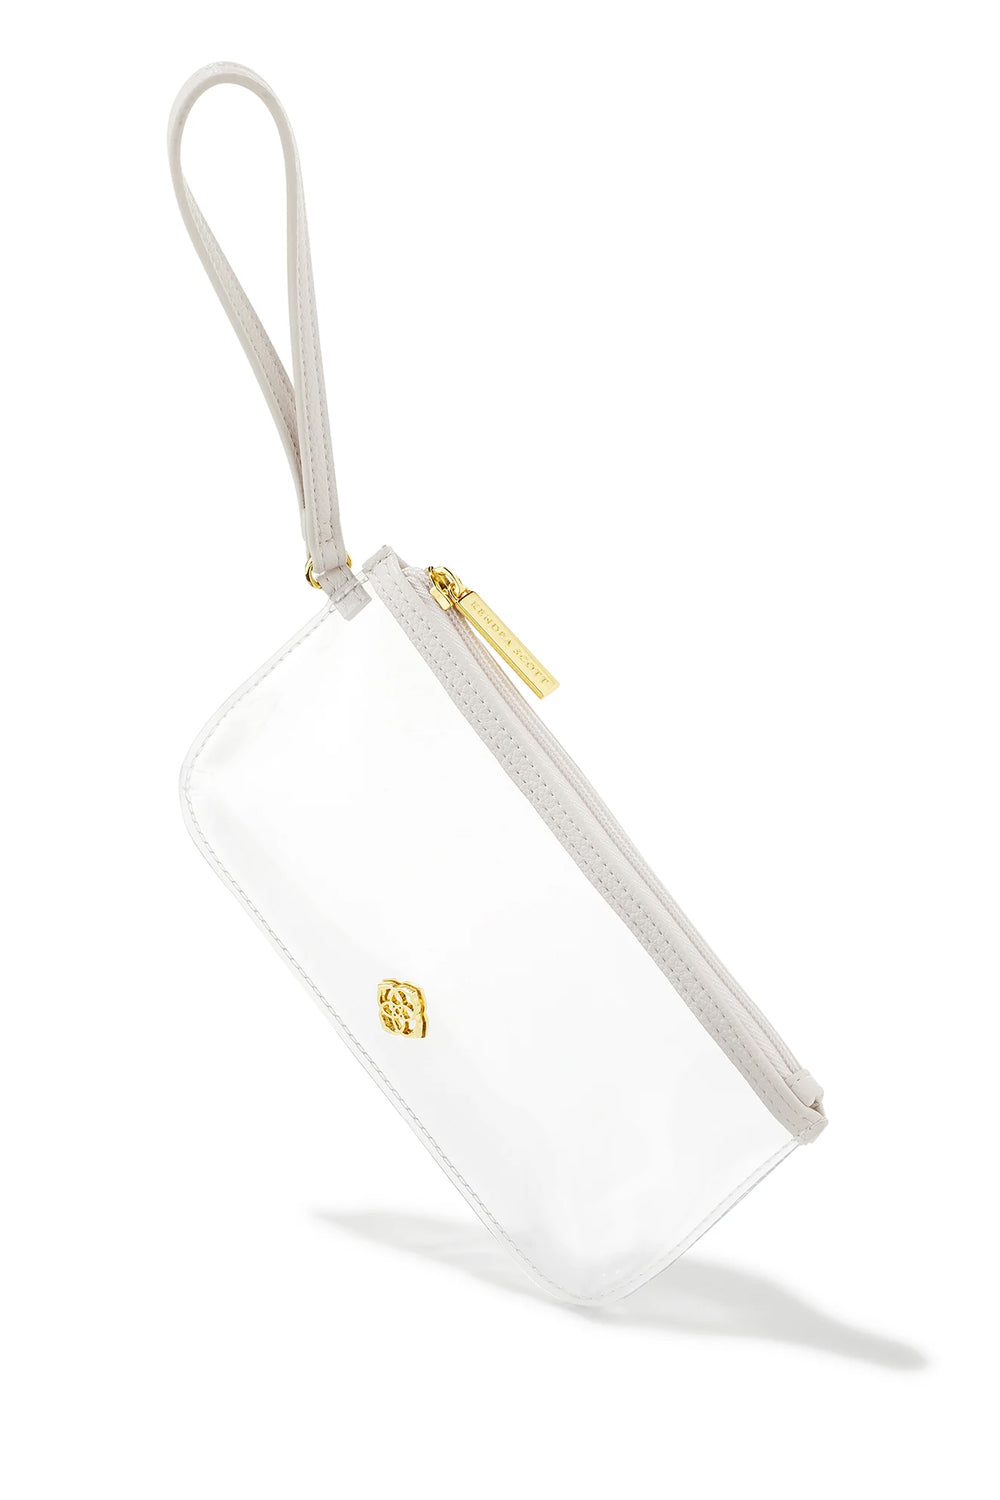 Melinda Crossbody Chain Link Bag - Tan | Makk Fashions